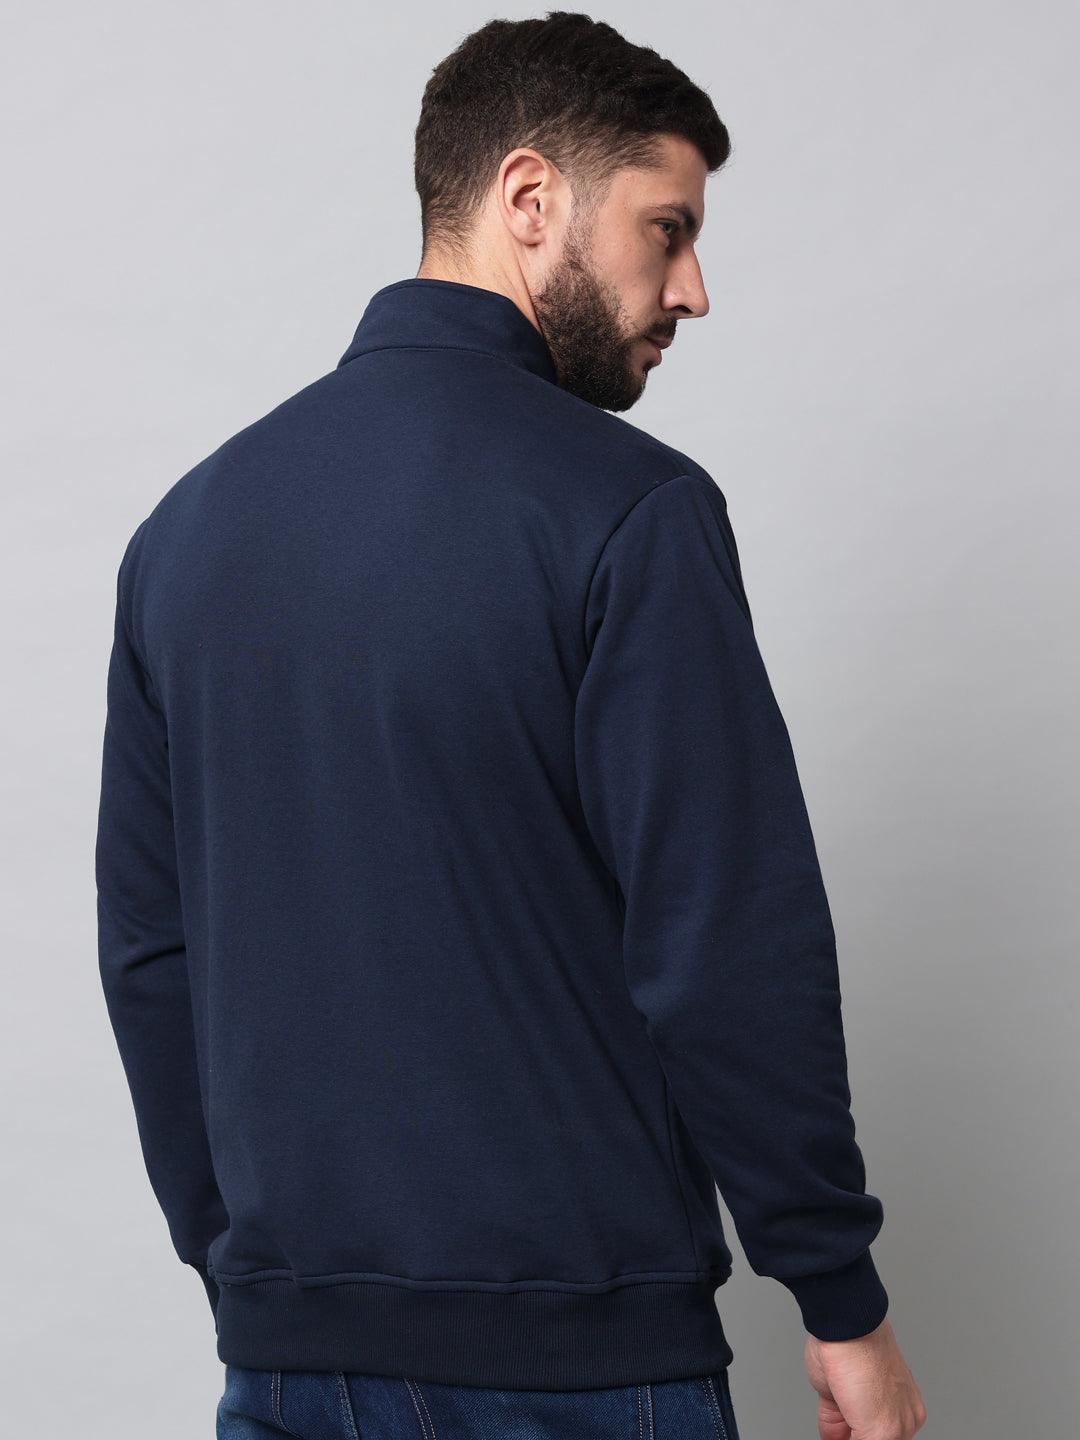 Griffel Men's Navy Cotton Fleece Zipper Sweatshirt with Long Sleeve and Front Logo Print - griffel